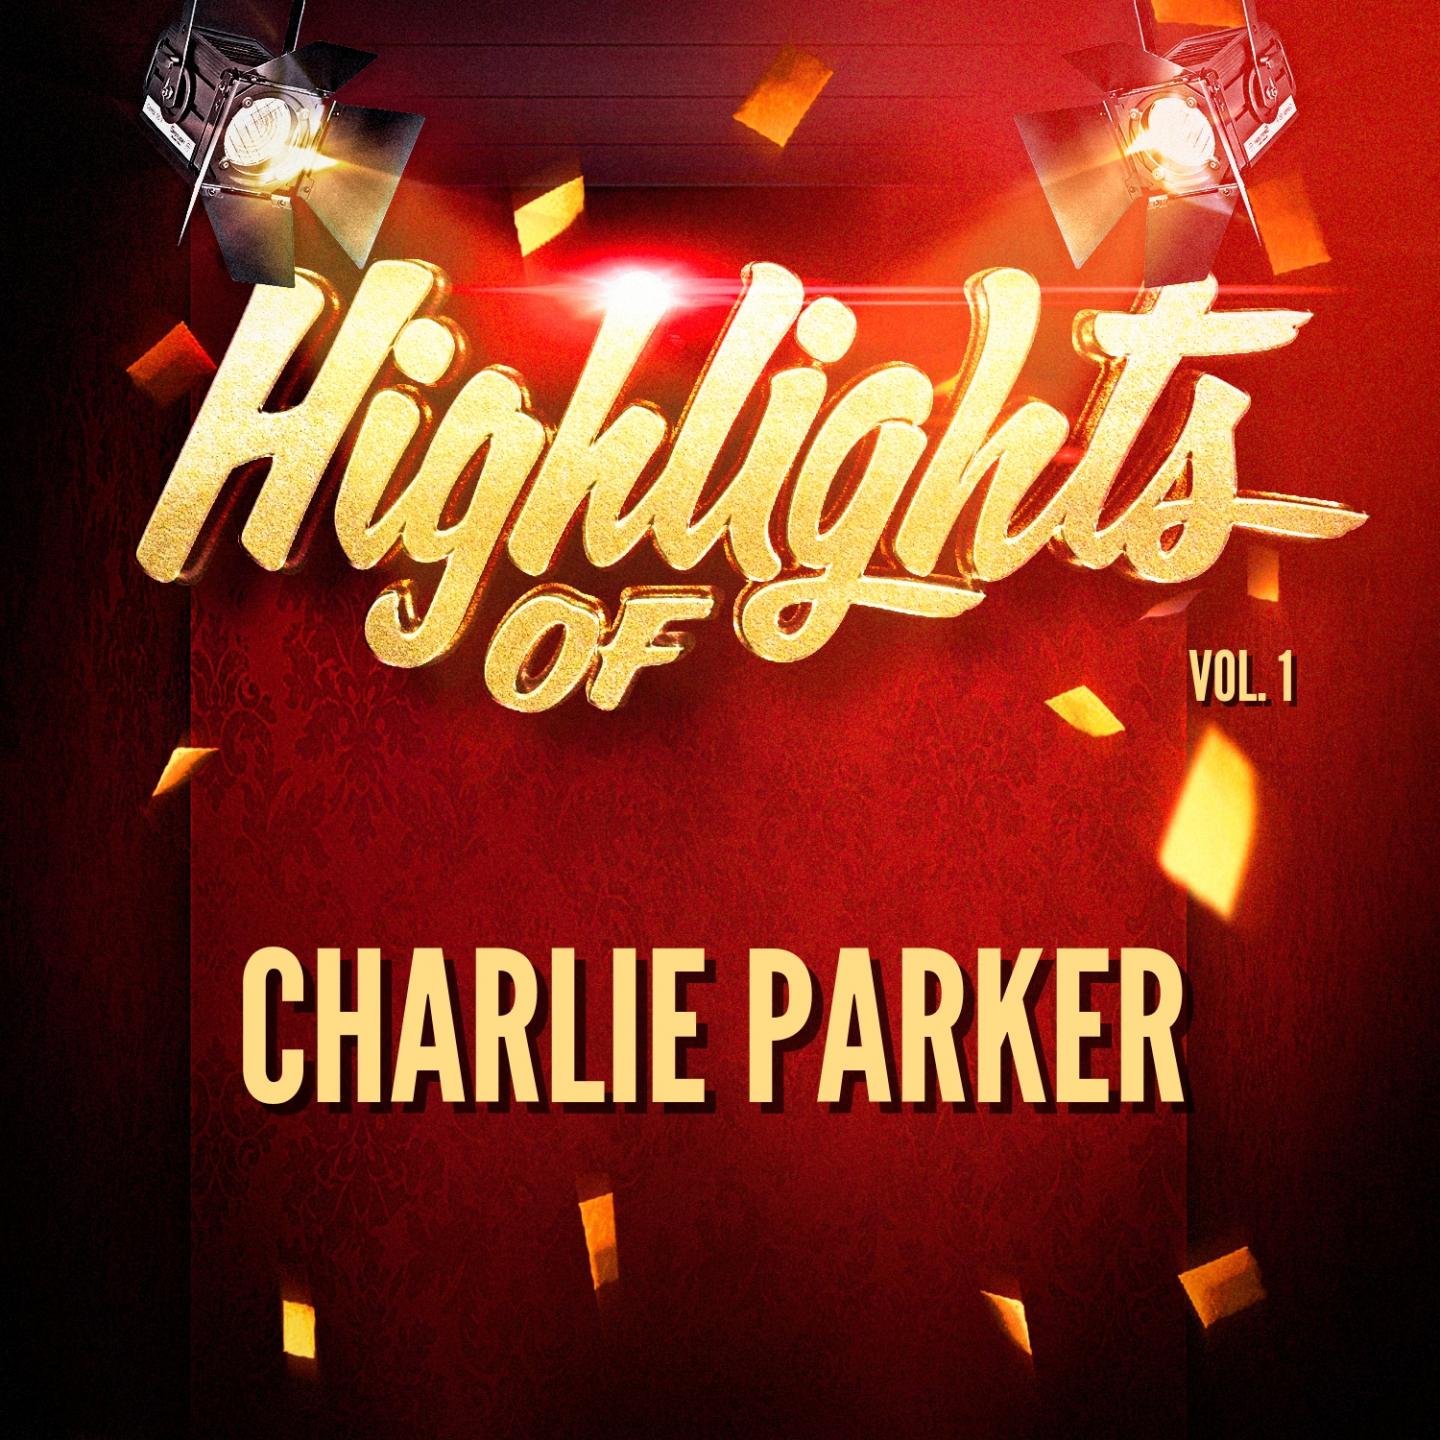 Highlights of Charlie Parker, Vol. 1